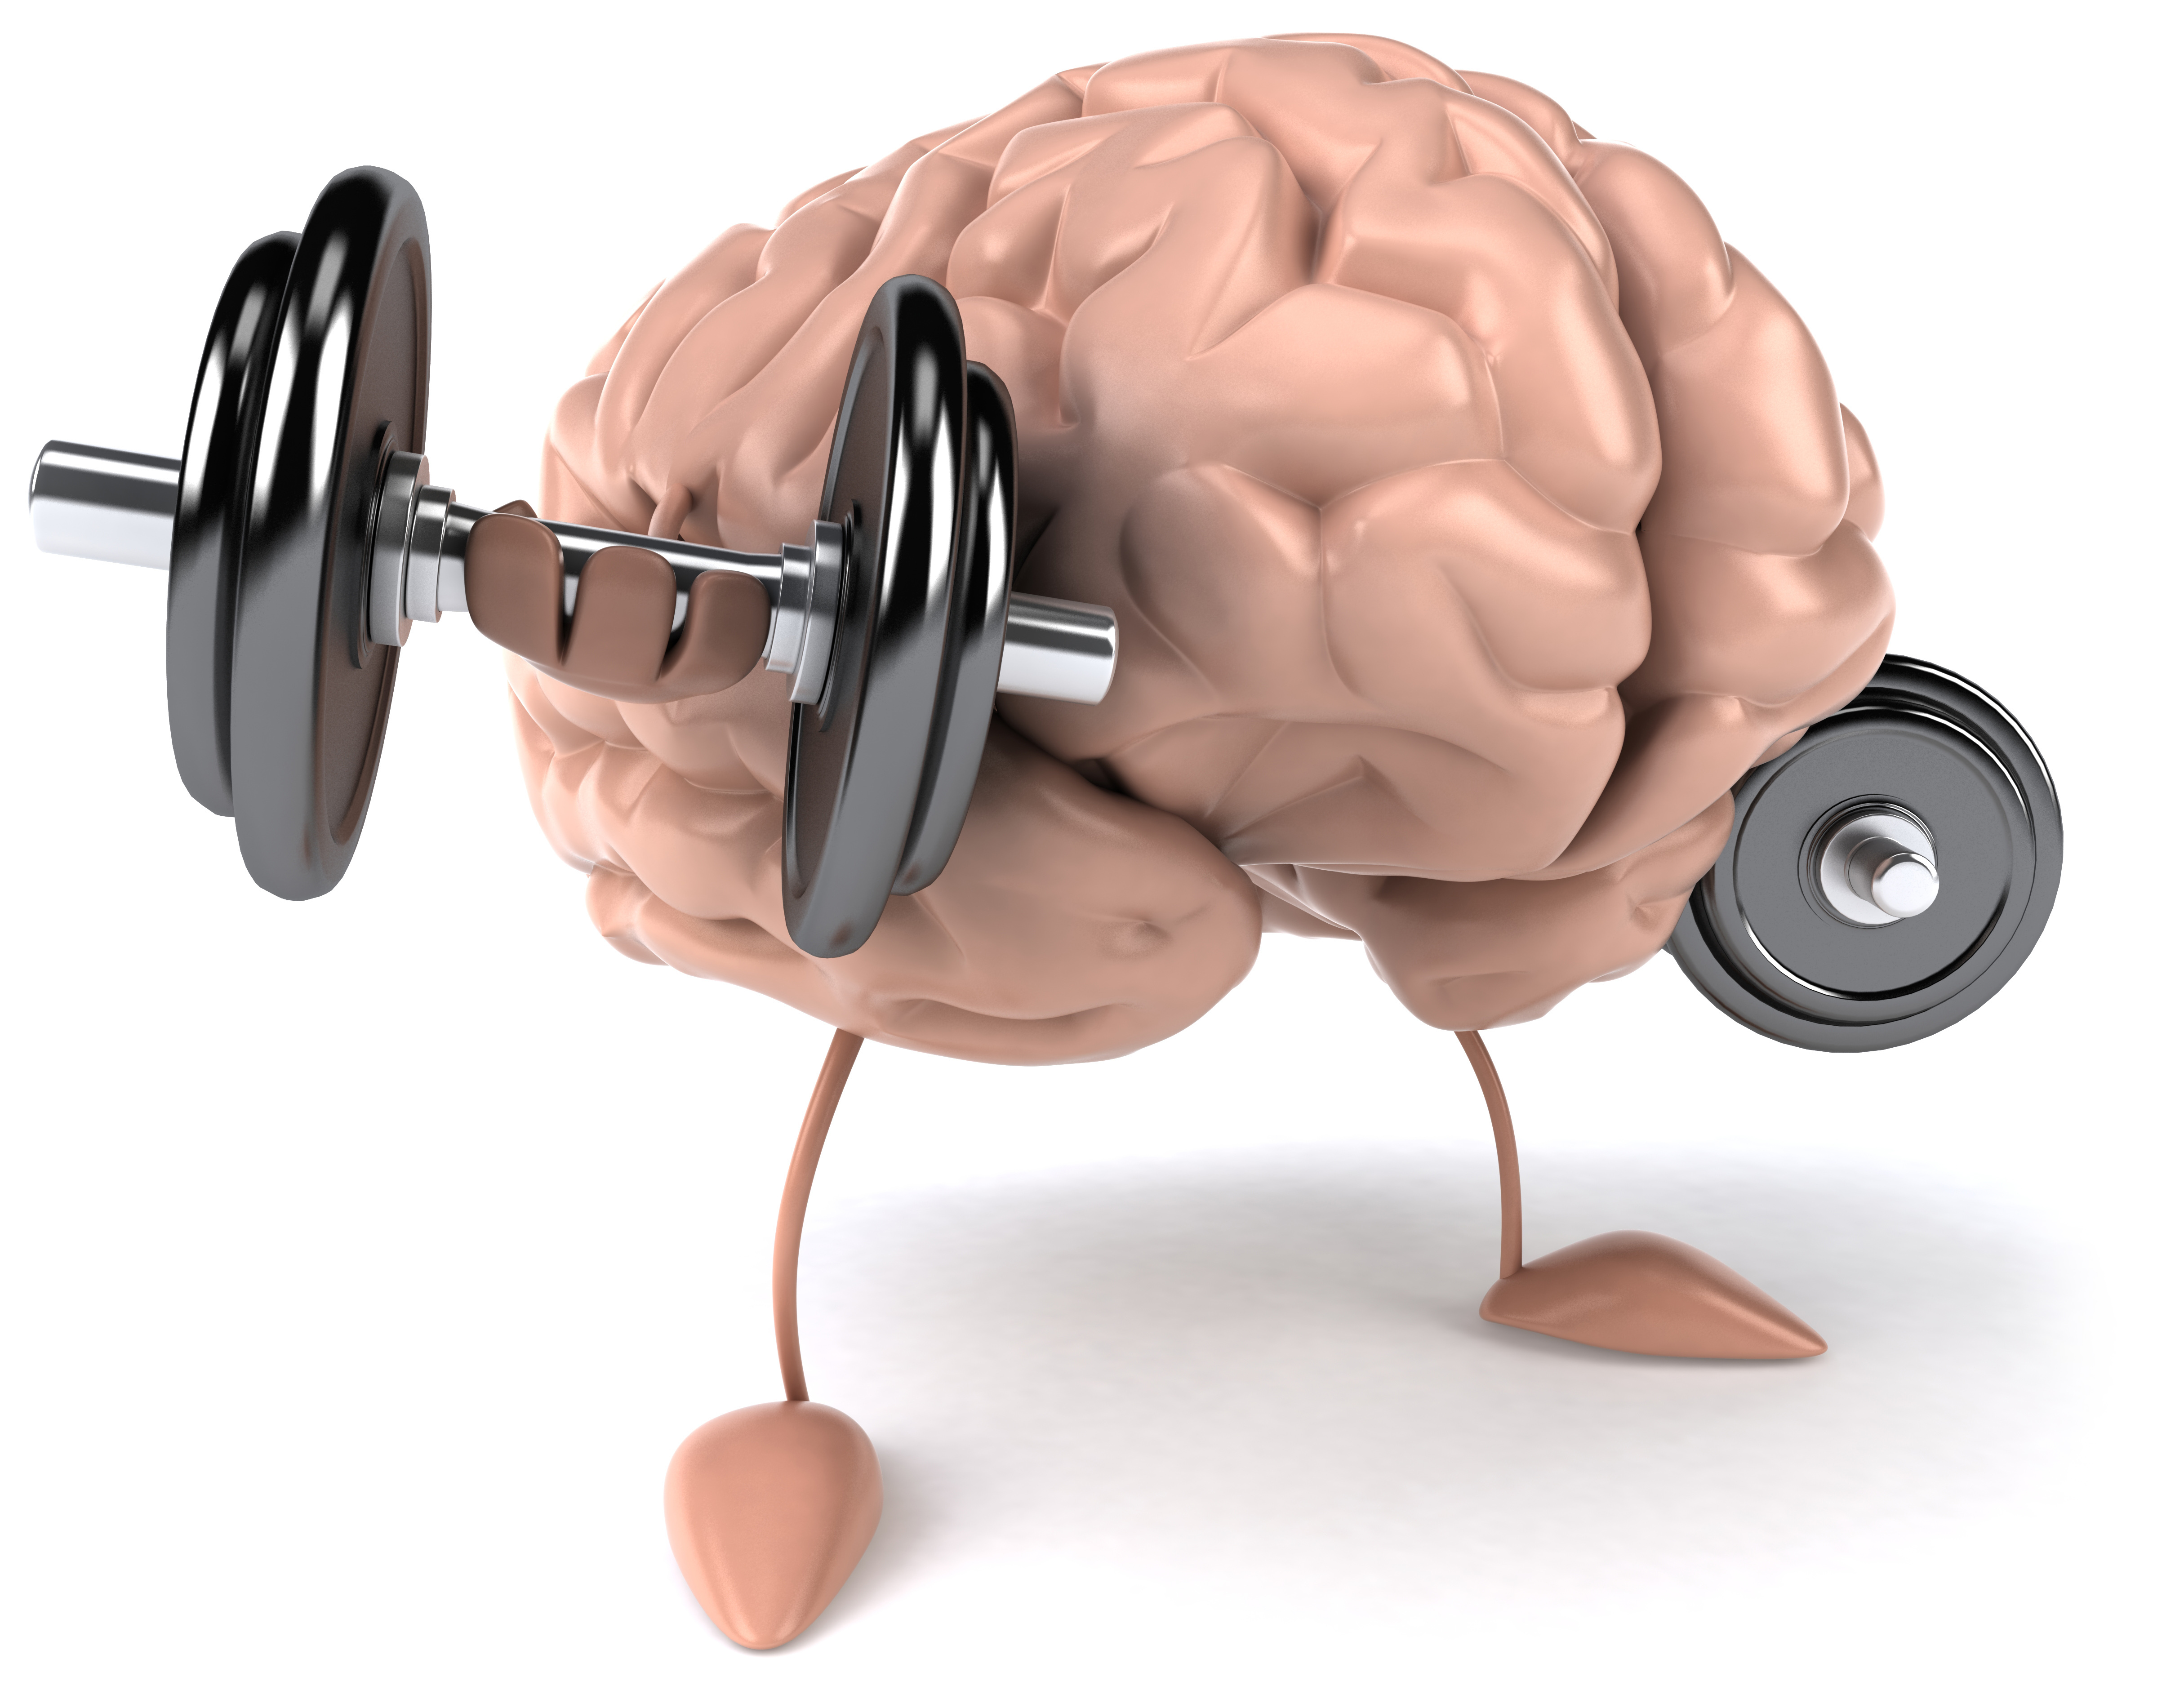 Brain exercise